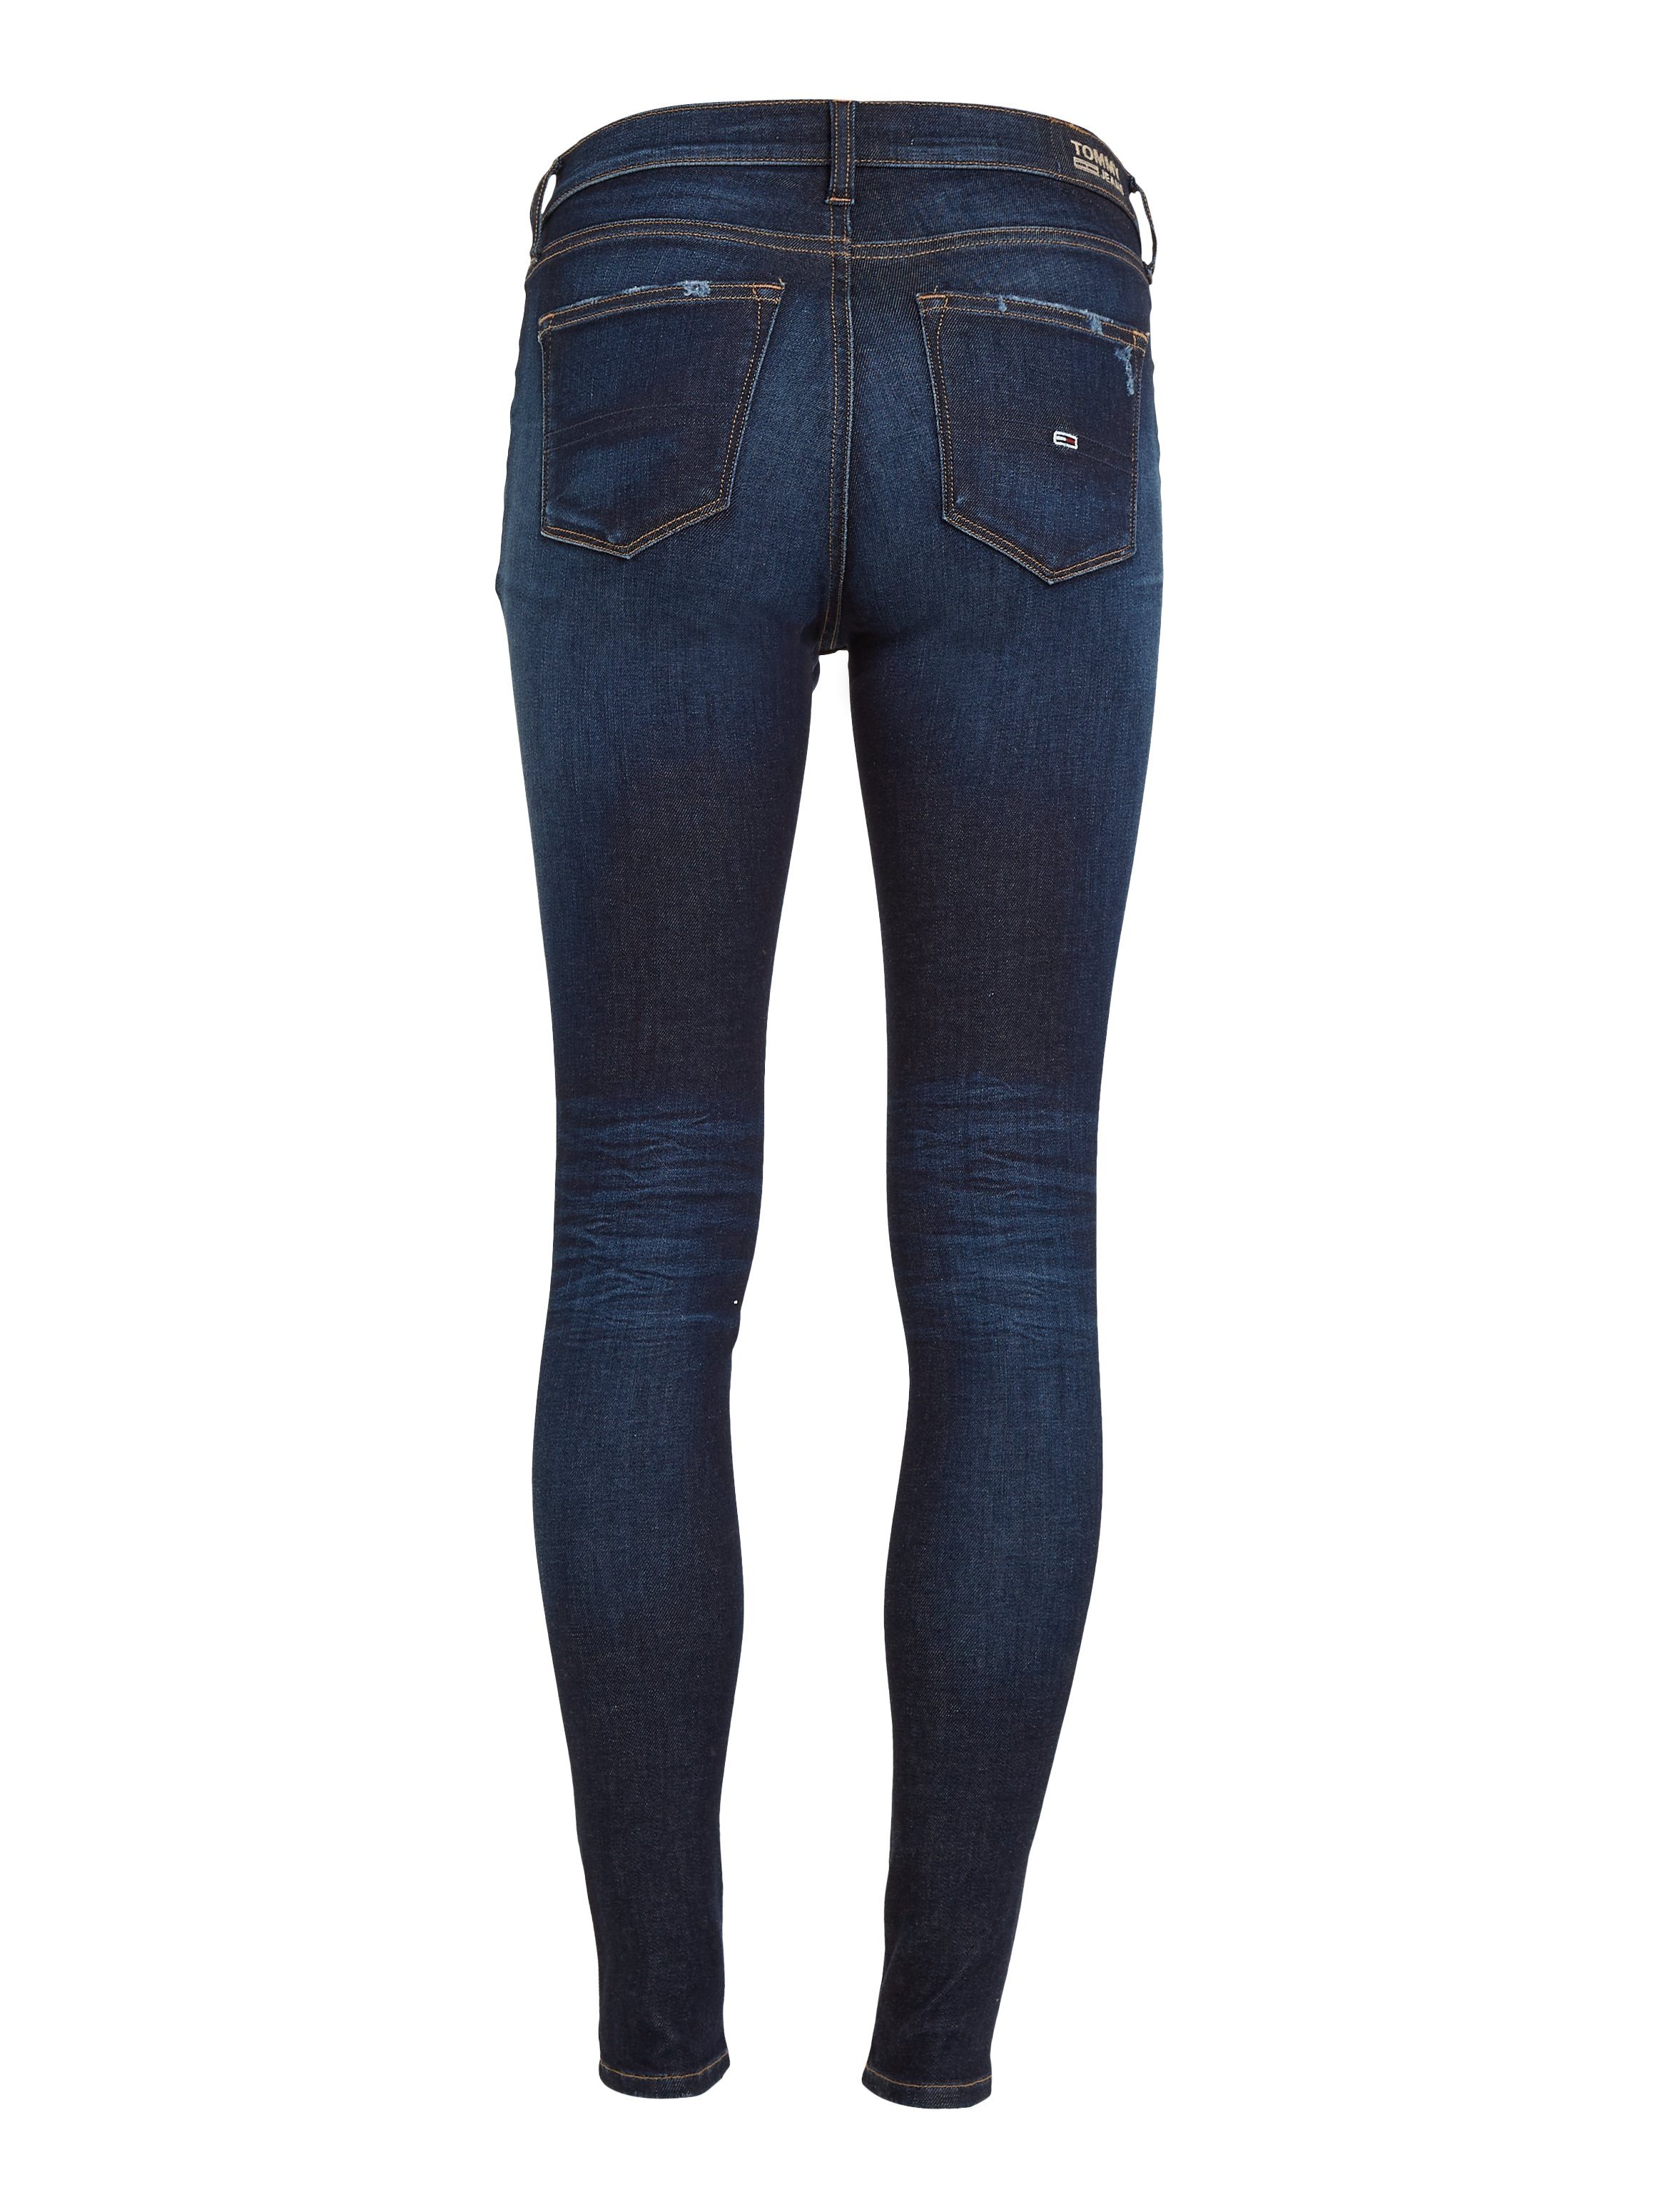 Tommy Jeans Skinny-fit-Jeans mit Denim_dark Markenlabel Tommy Jeans